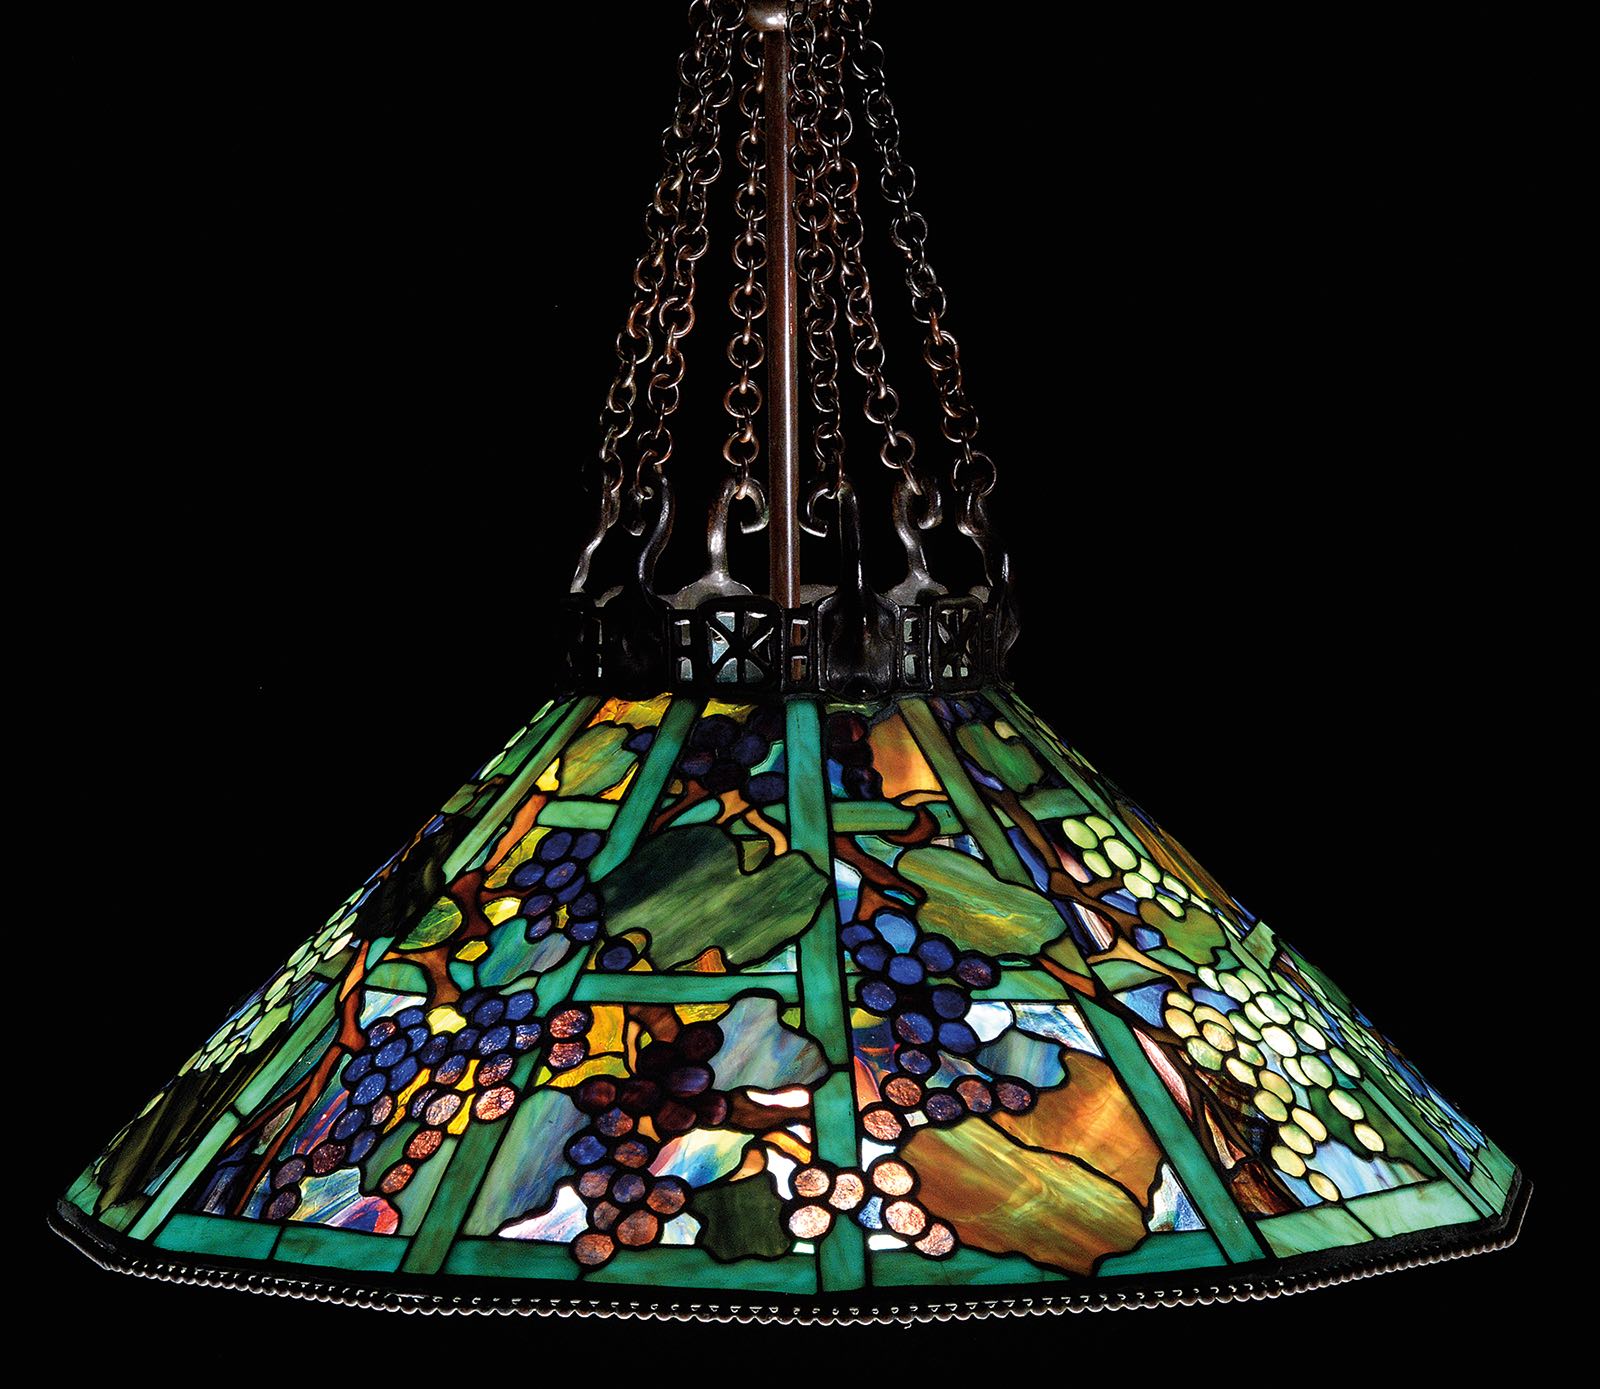 Lot 1294, a Tiffany Grape Trellis Lamp estimated at $100,000-150,000.